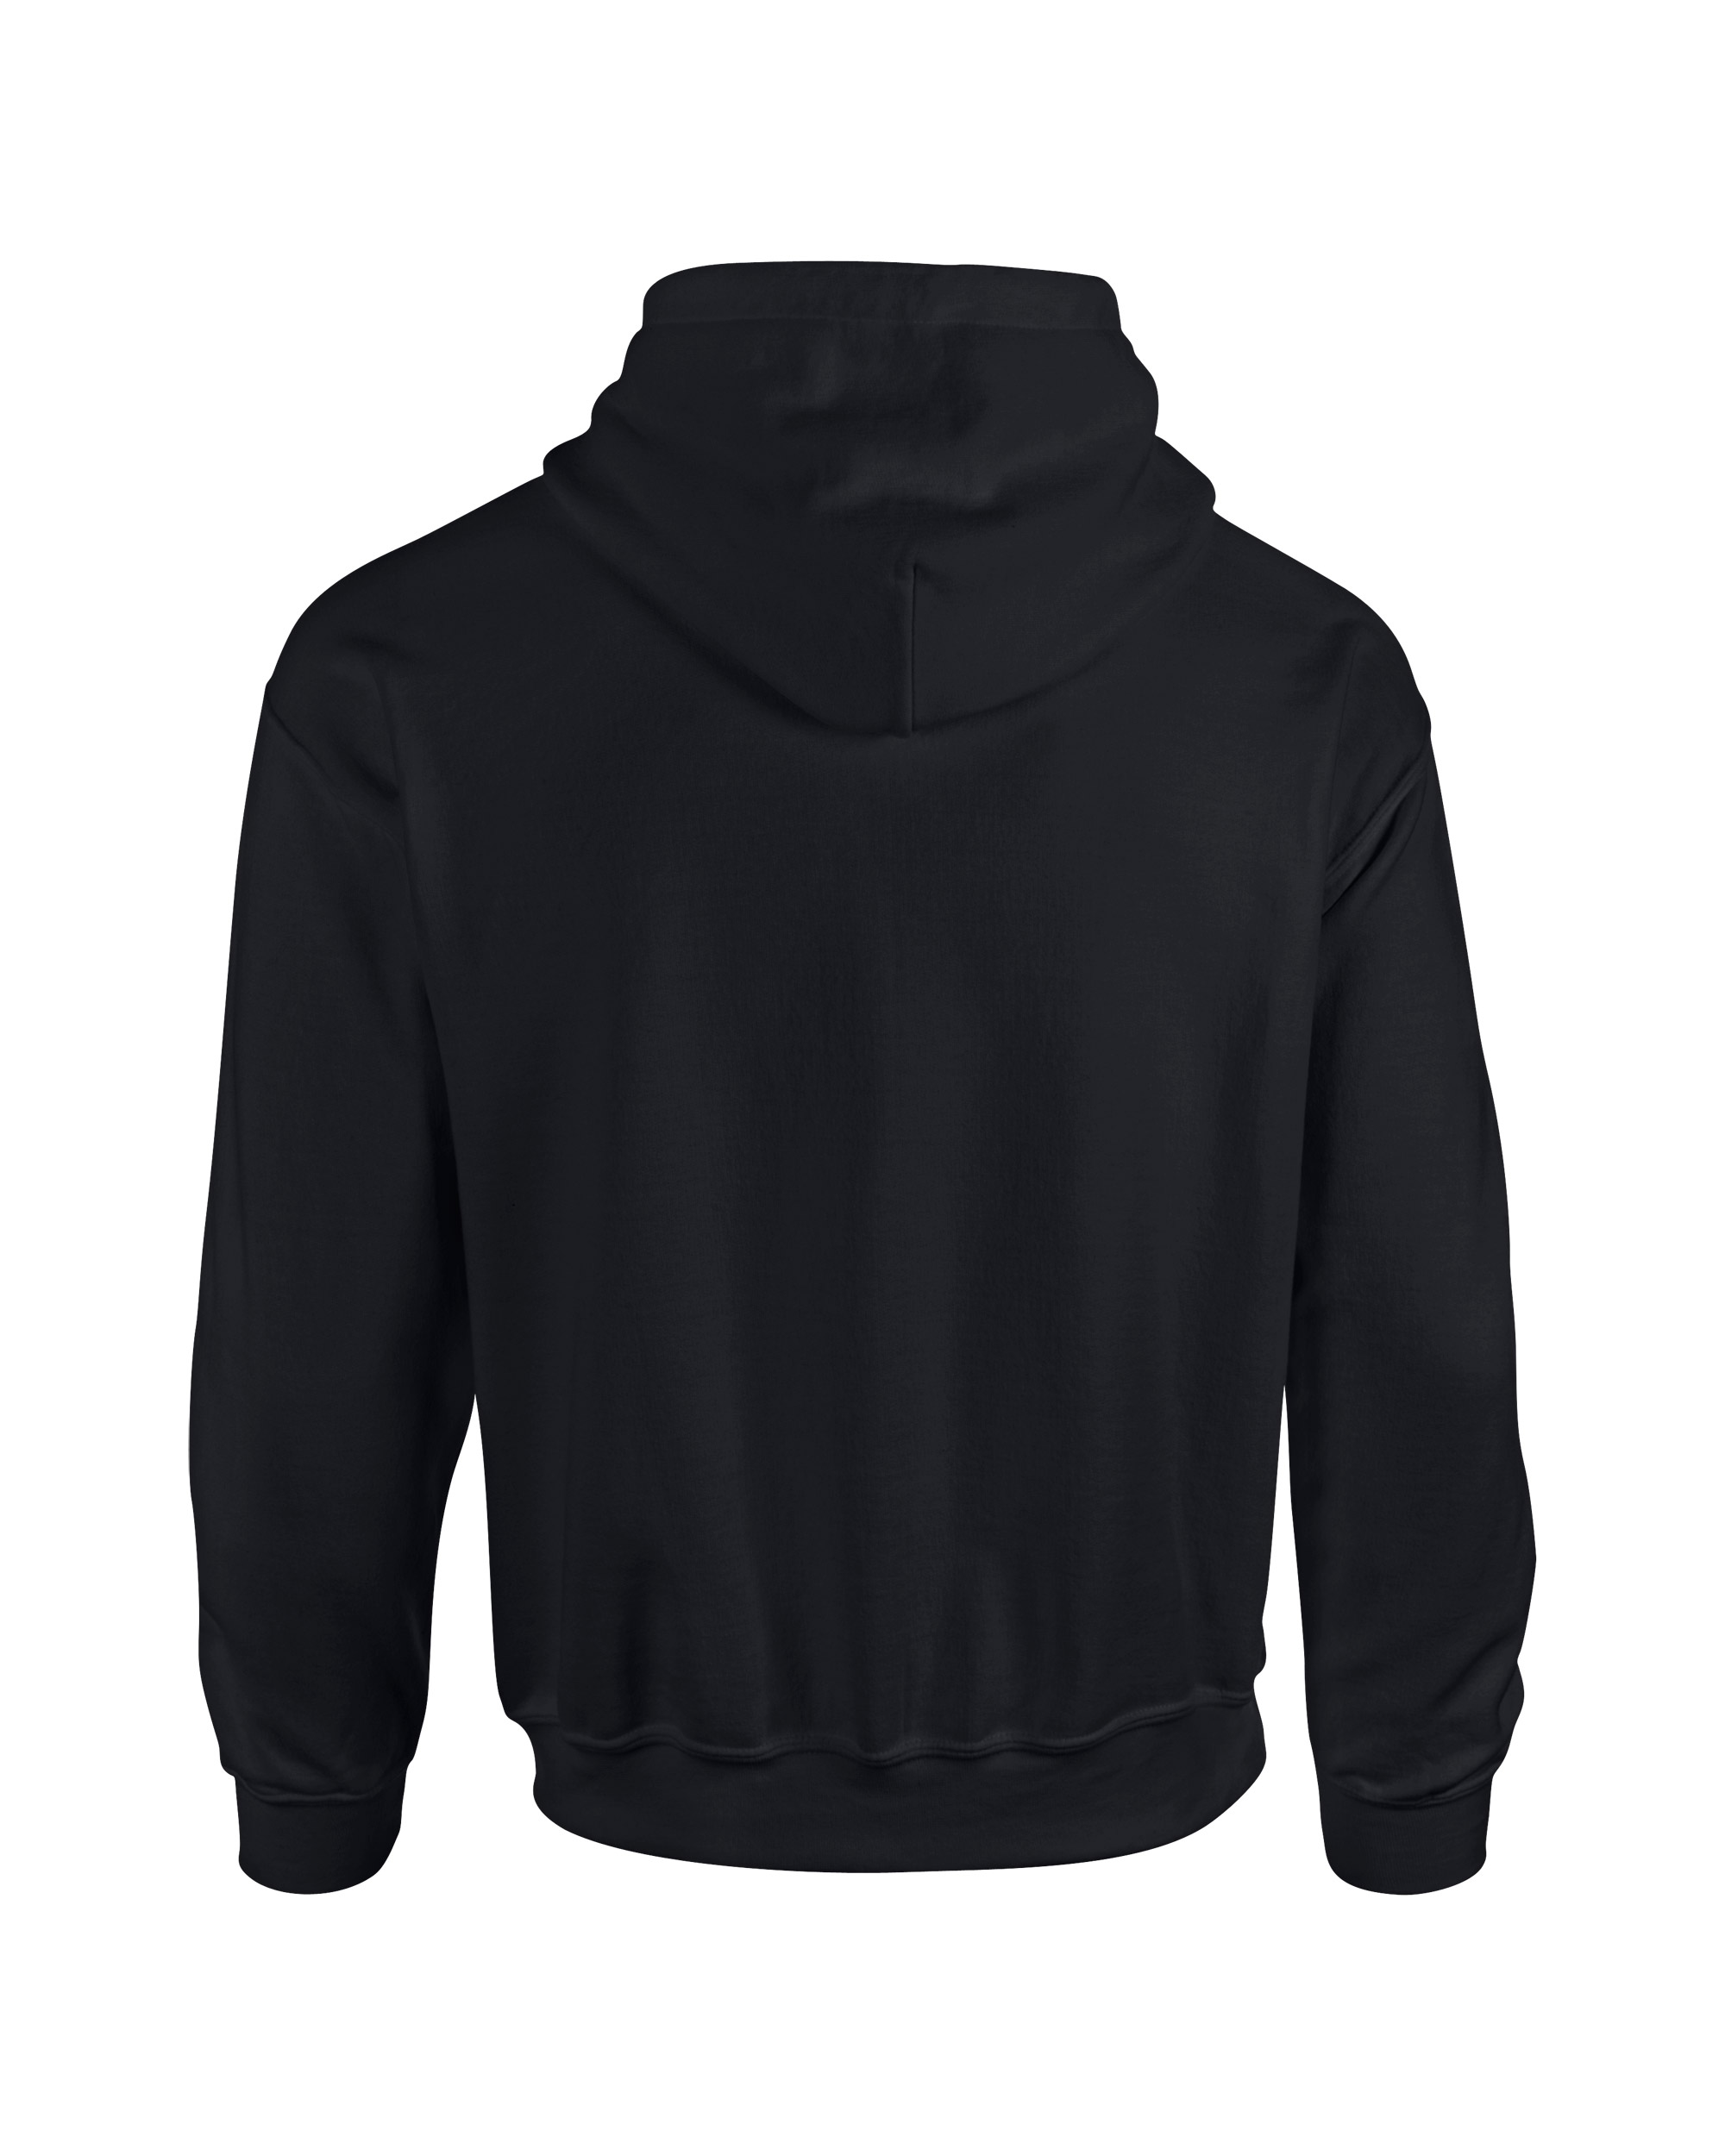 Adult Unisex Heavy Blend Pullover Hood Sweatshirt - Team Shirt Pros